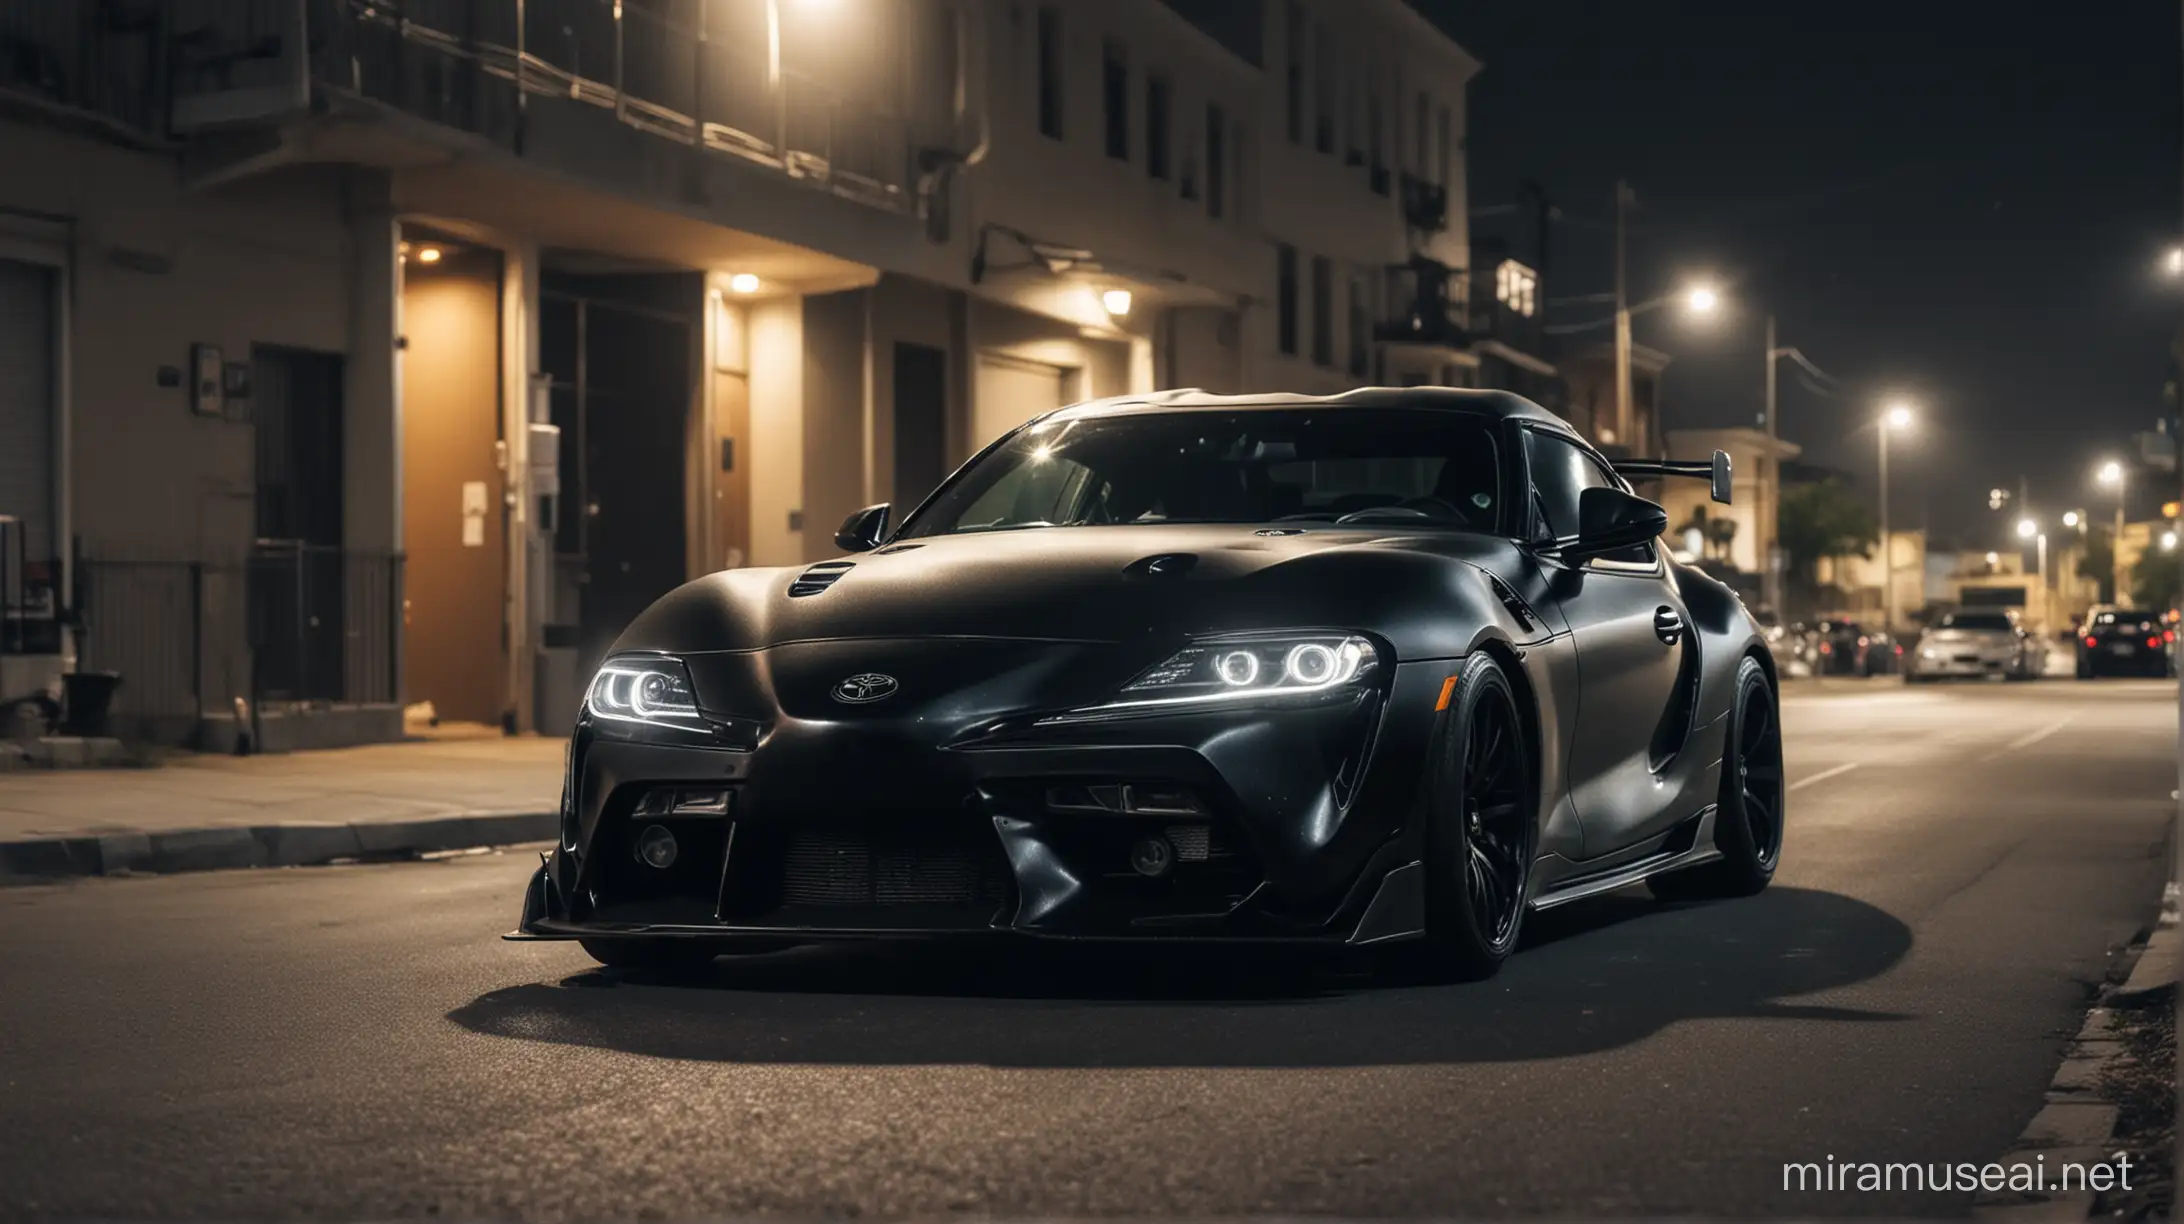 Aggressive Black Toyota Supra Racing Through Night Streets